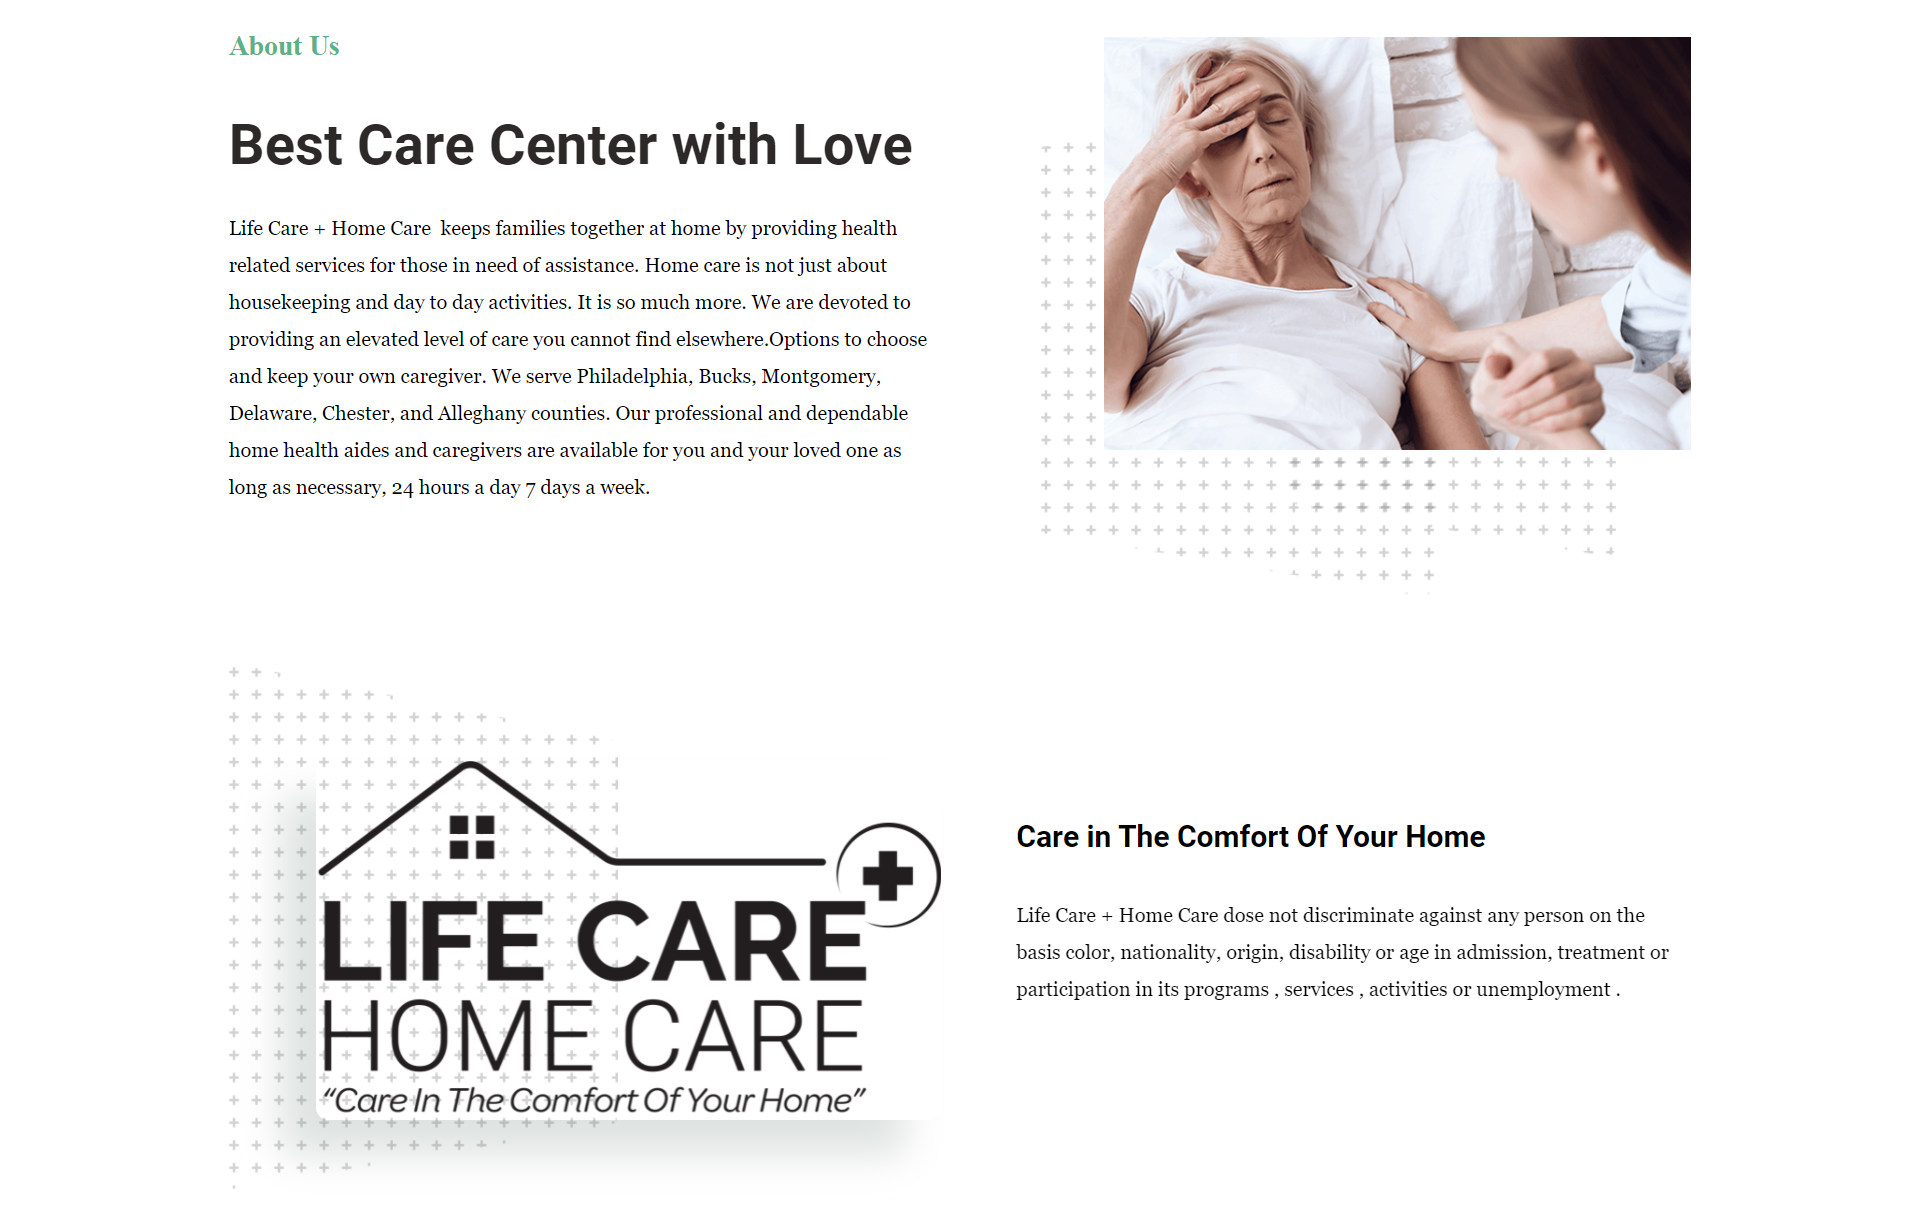 Life Care+ Home Care Image 1